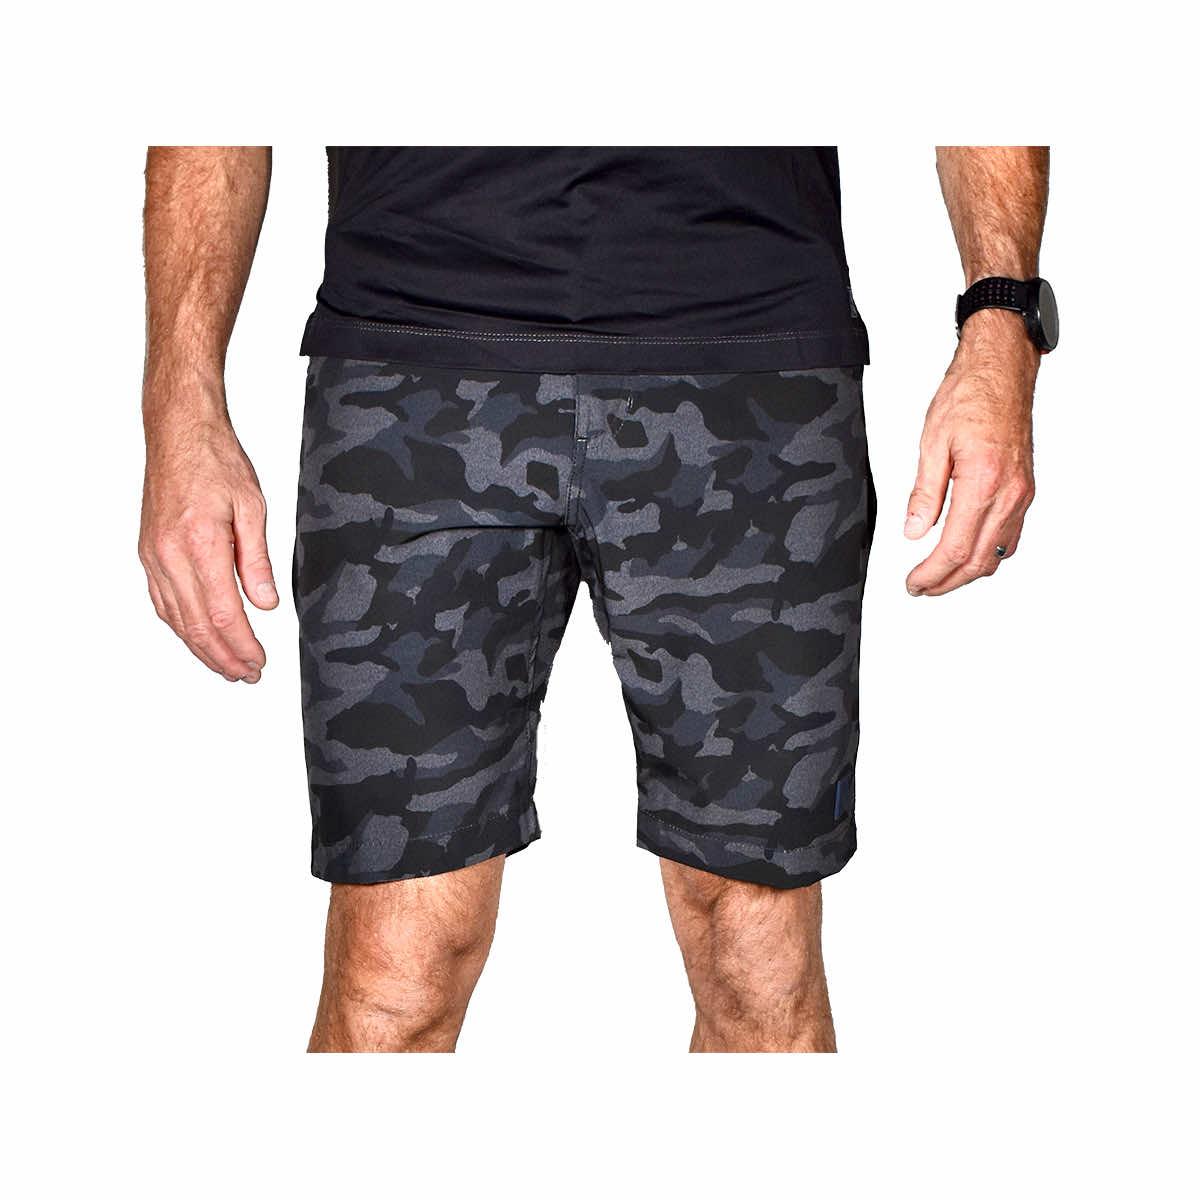  Men's Camo Gurkha Hybrid Shorts - 9 Inch